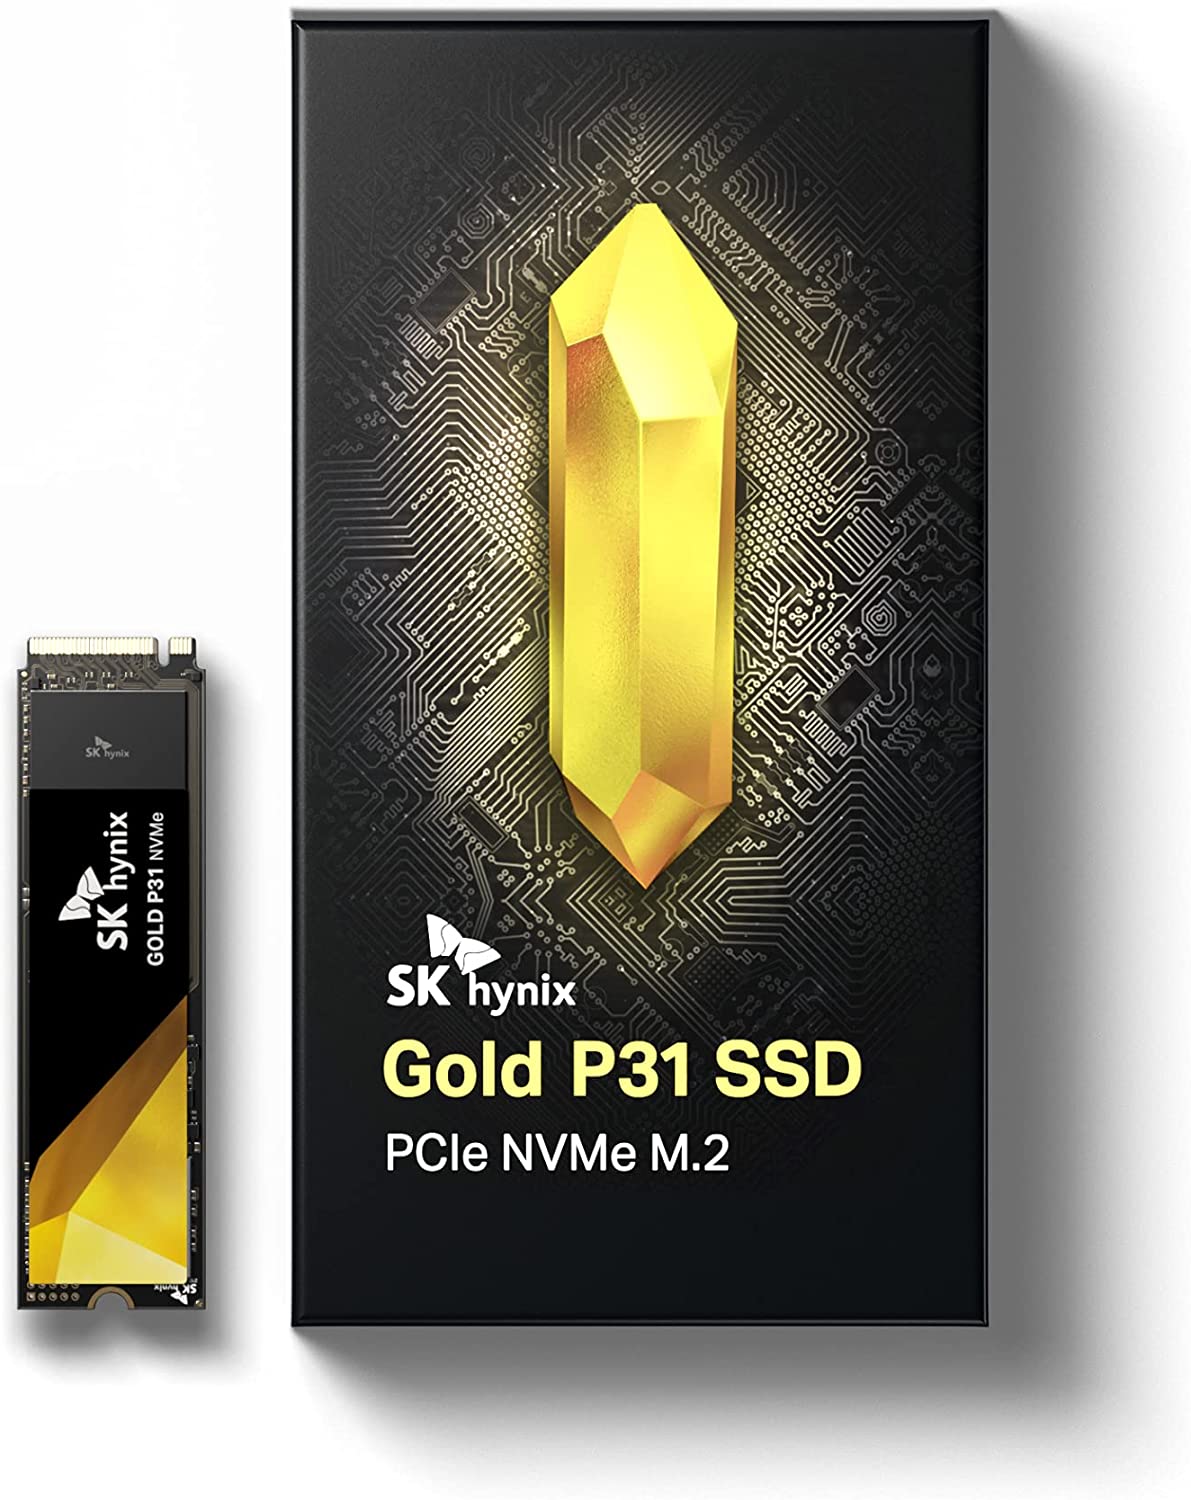 1TB SK hynix Gold P31 M.2 PCIe NVMe SSD $114.99 @ amazon.com